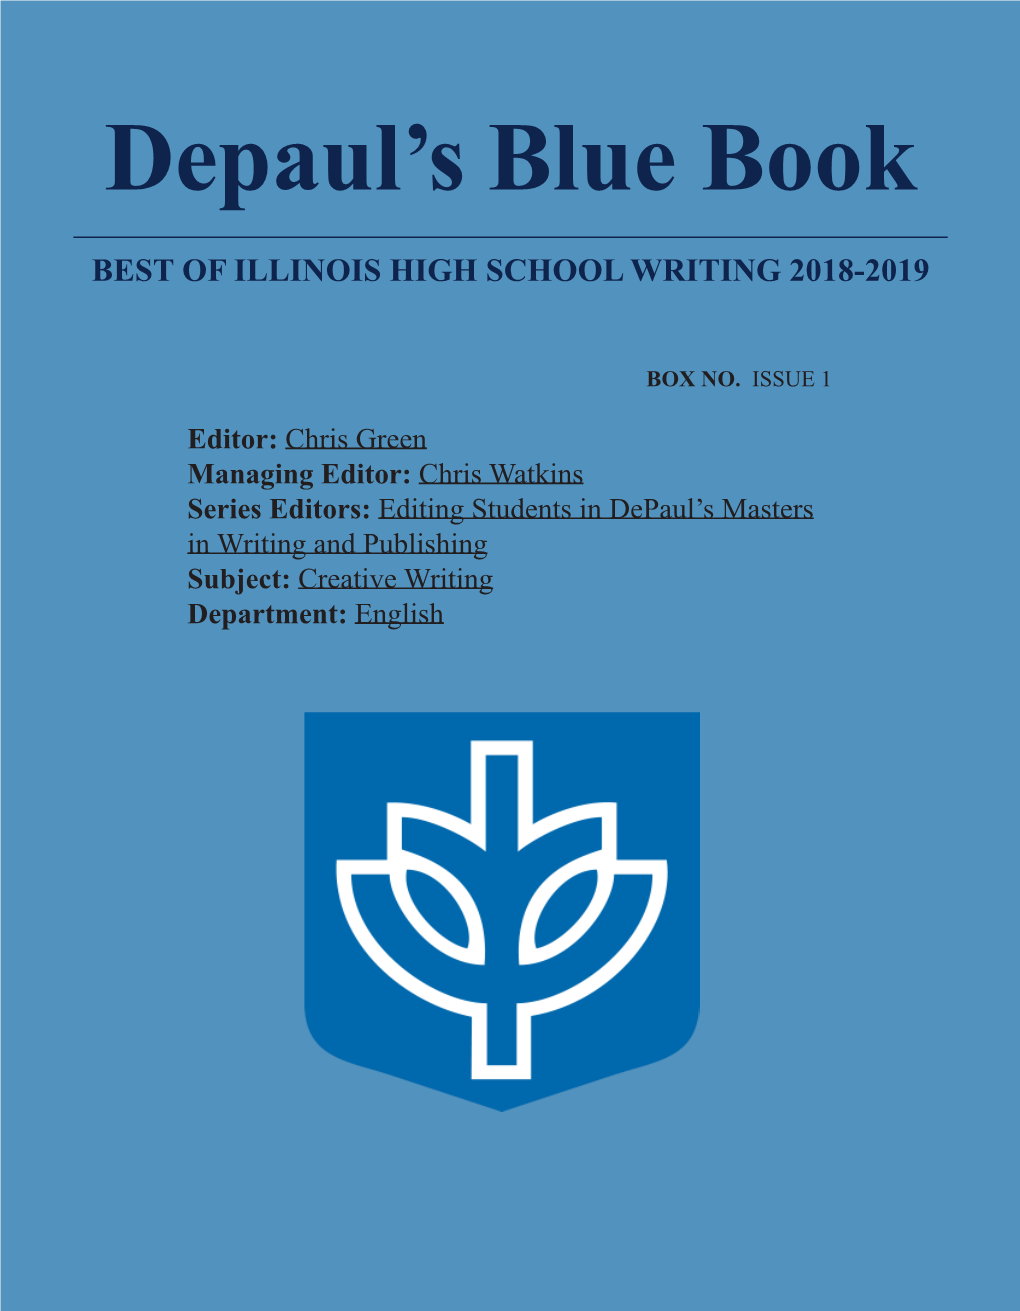 Depaul's Blue Book